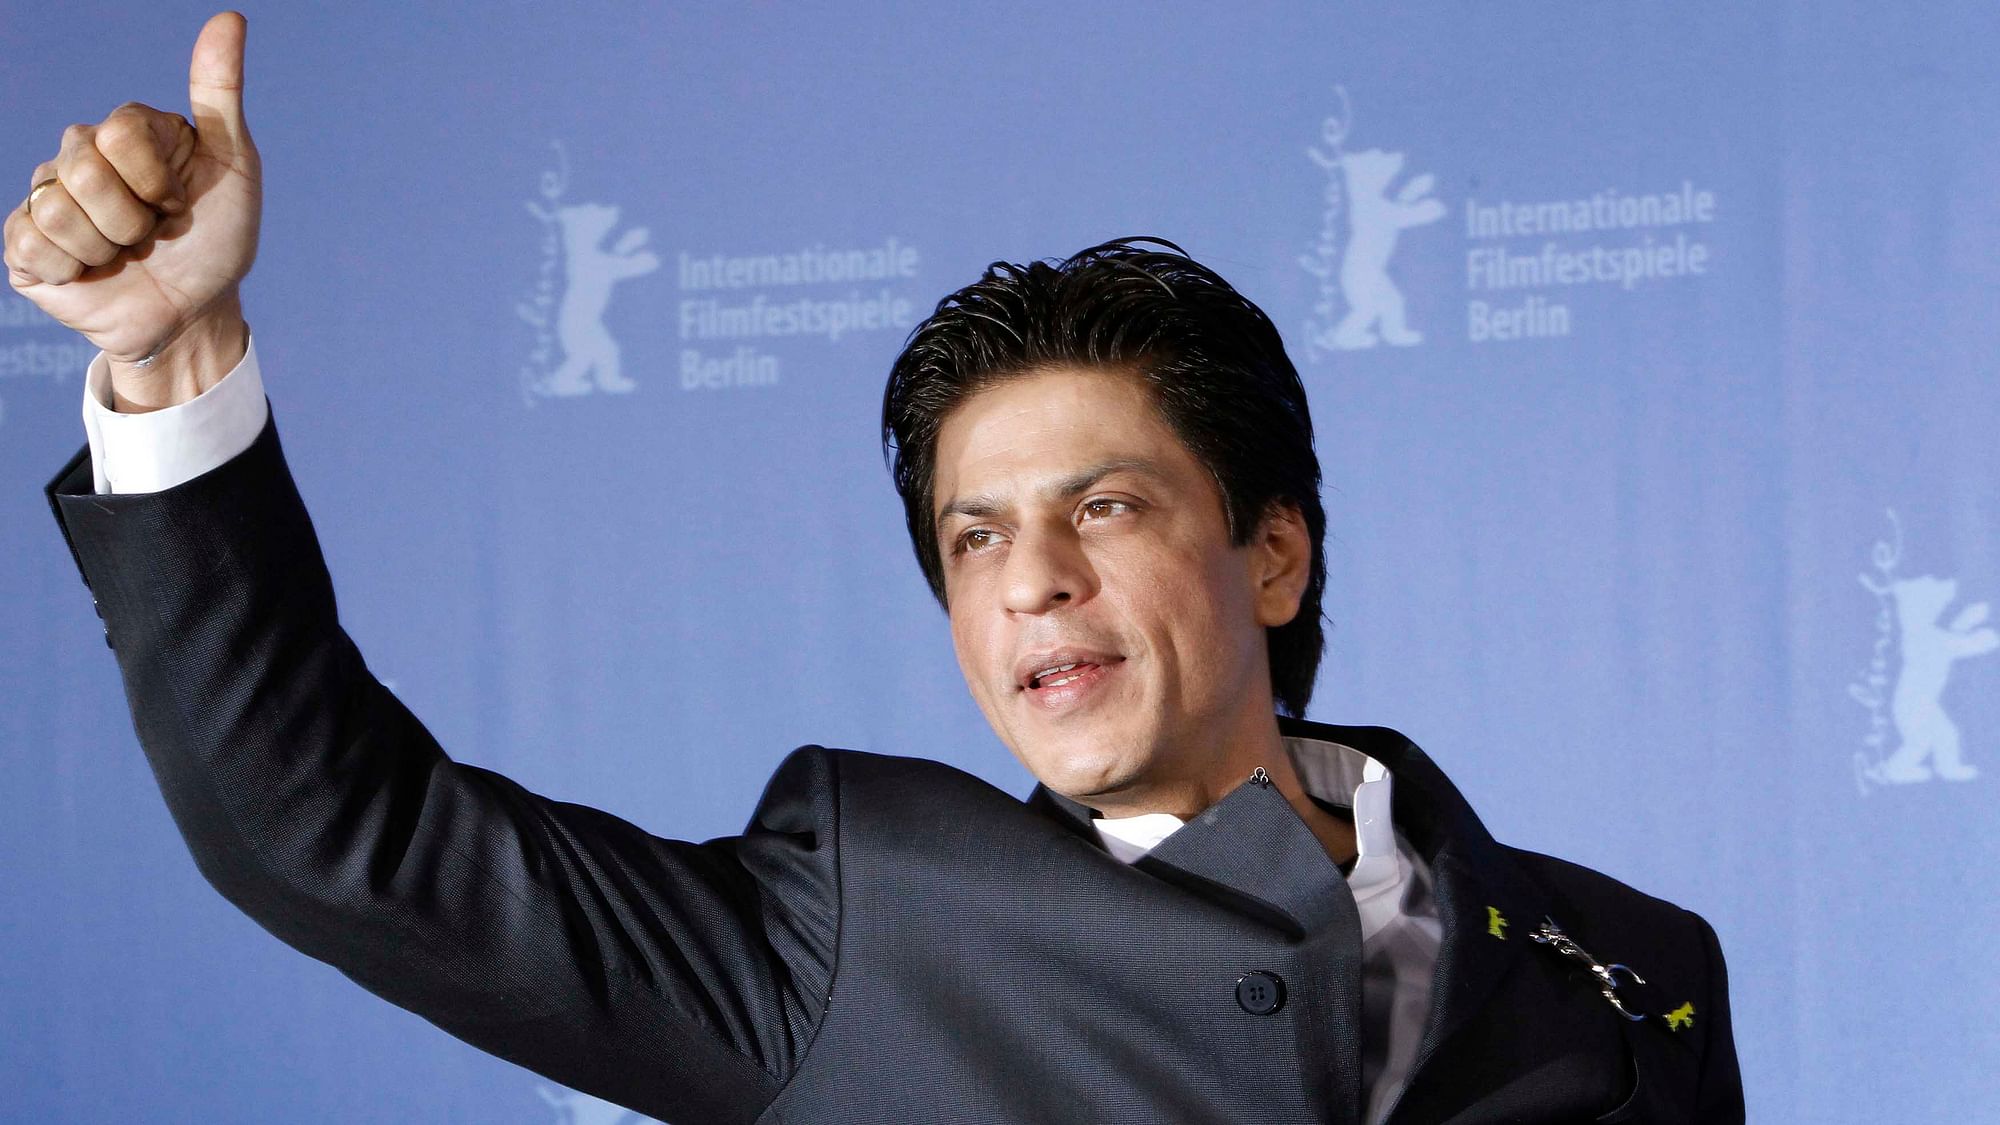 Shah Rukh Khan at the 60th Berlinale International Film Festival in Berlin 2010 (Photo: Reuters)